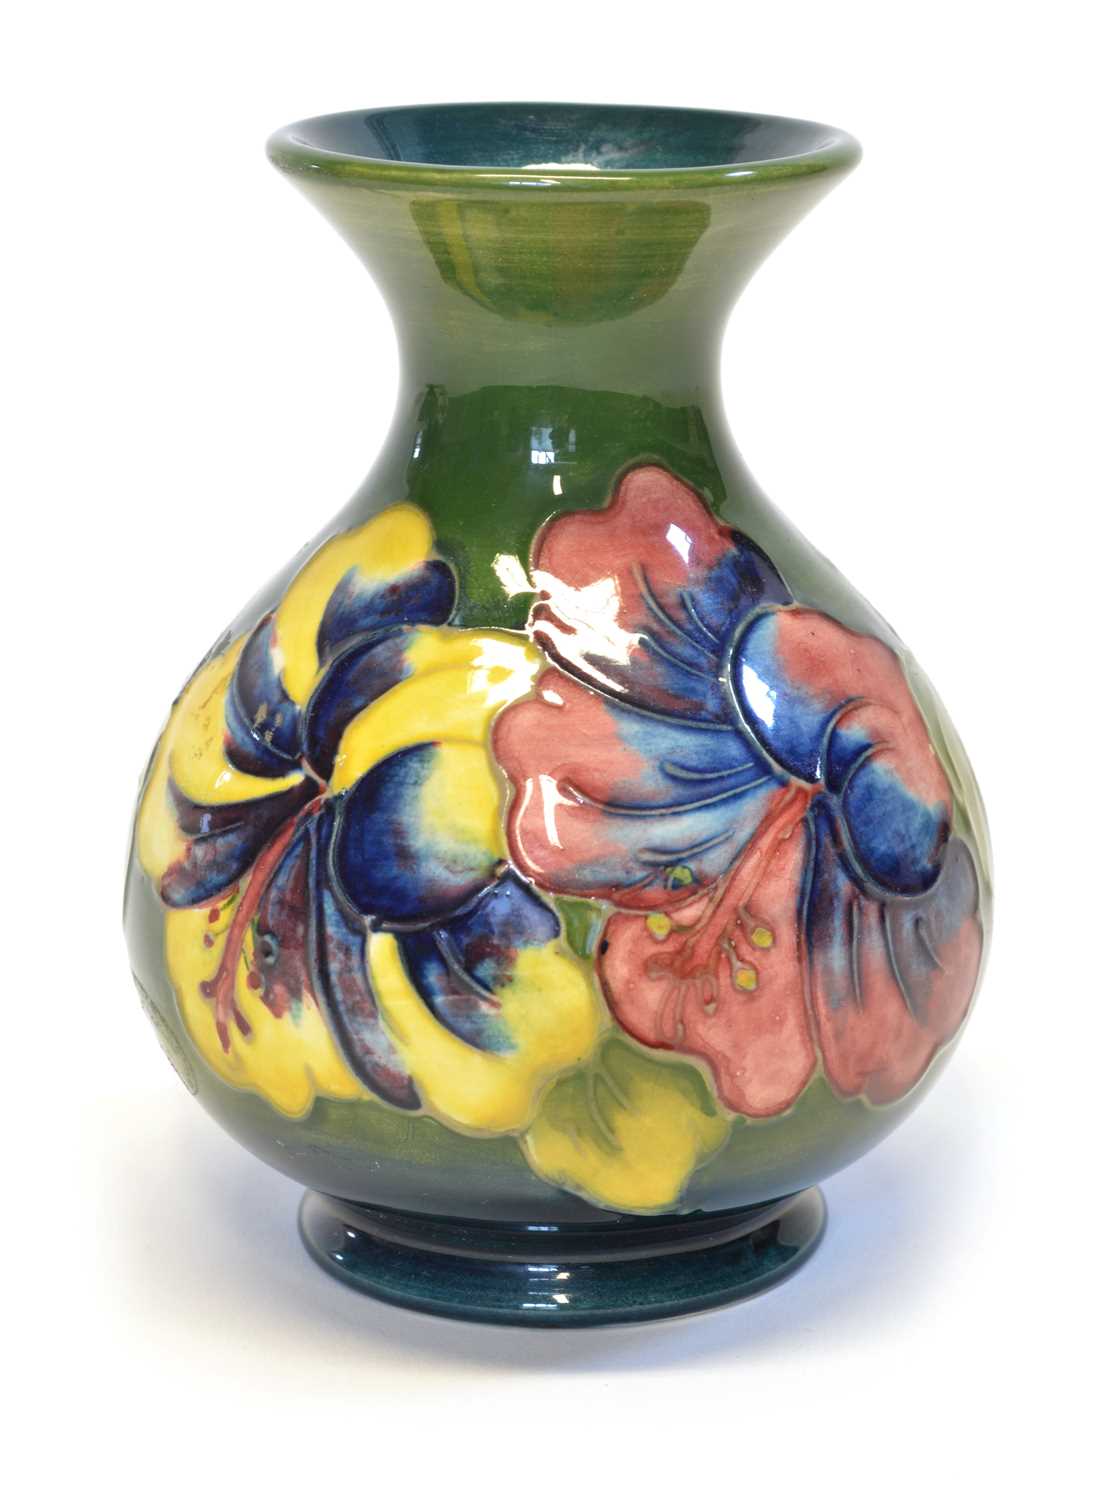 Lot 79 - Moorcroft Hibiscus pattern vase